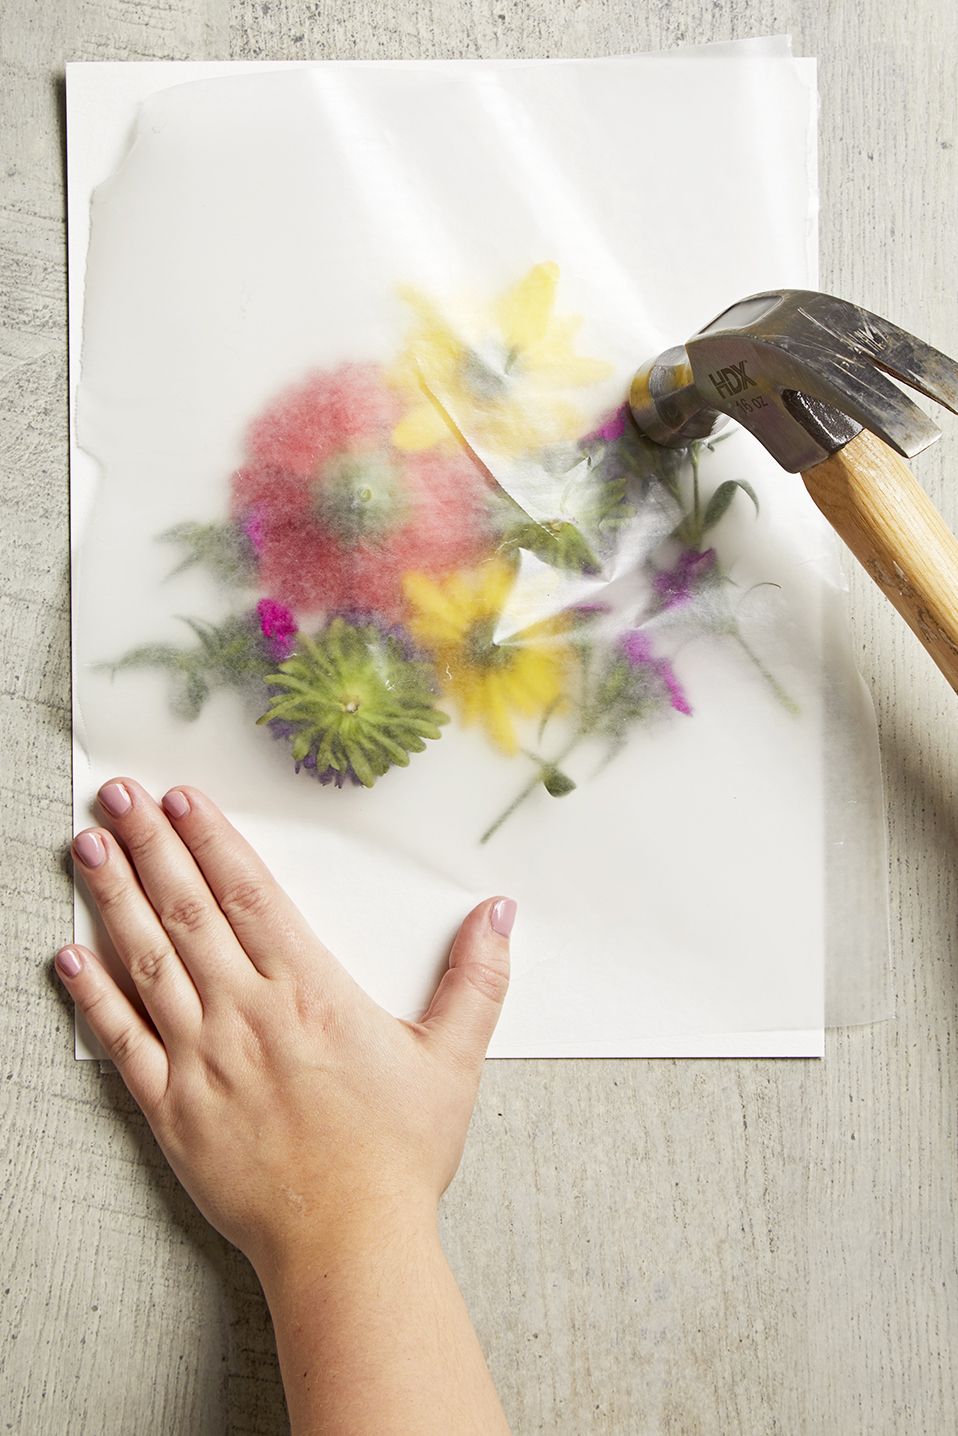 This Simple DIY Turns Fresh Flowers Into Beautiful Art